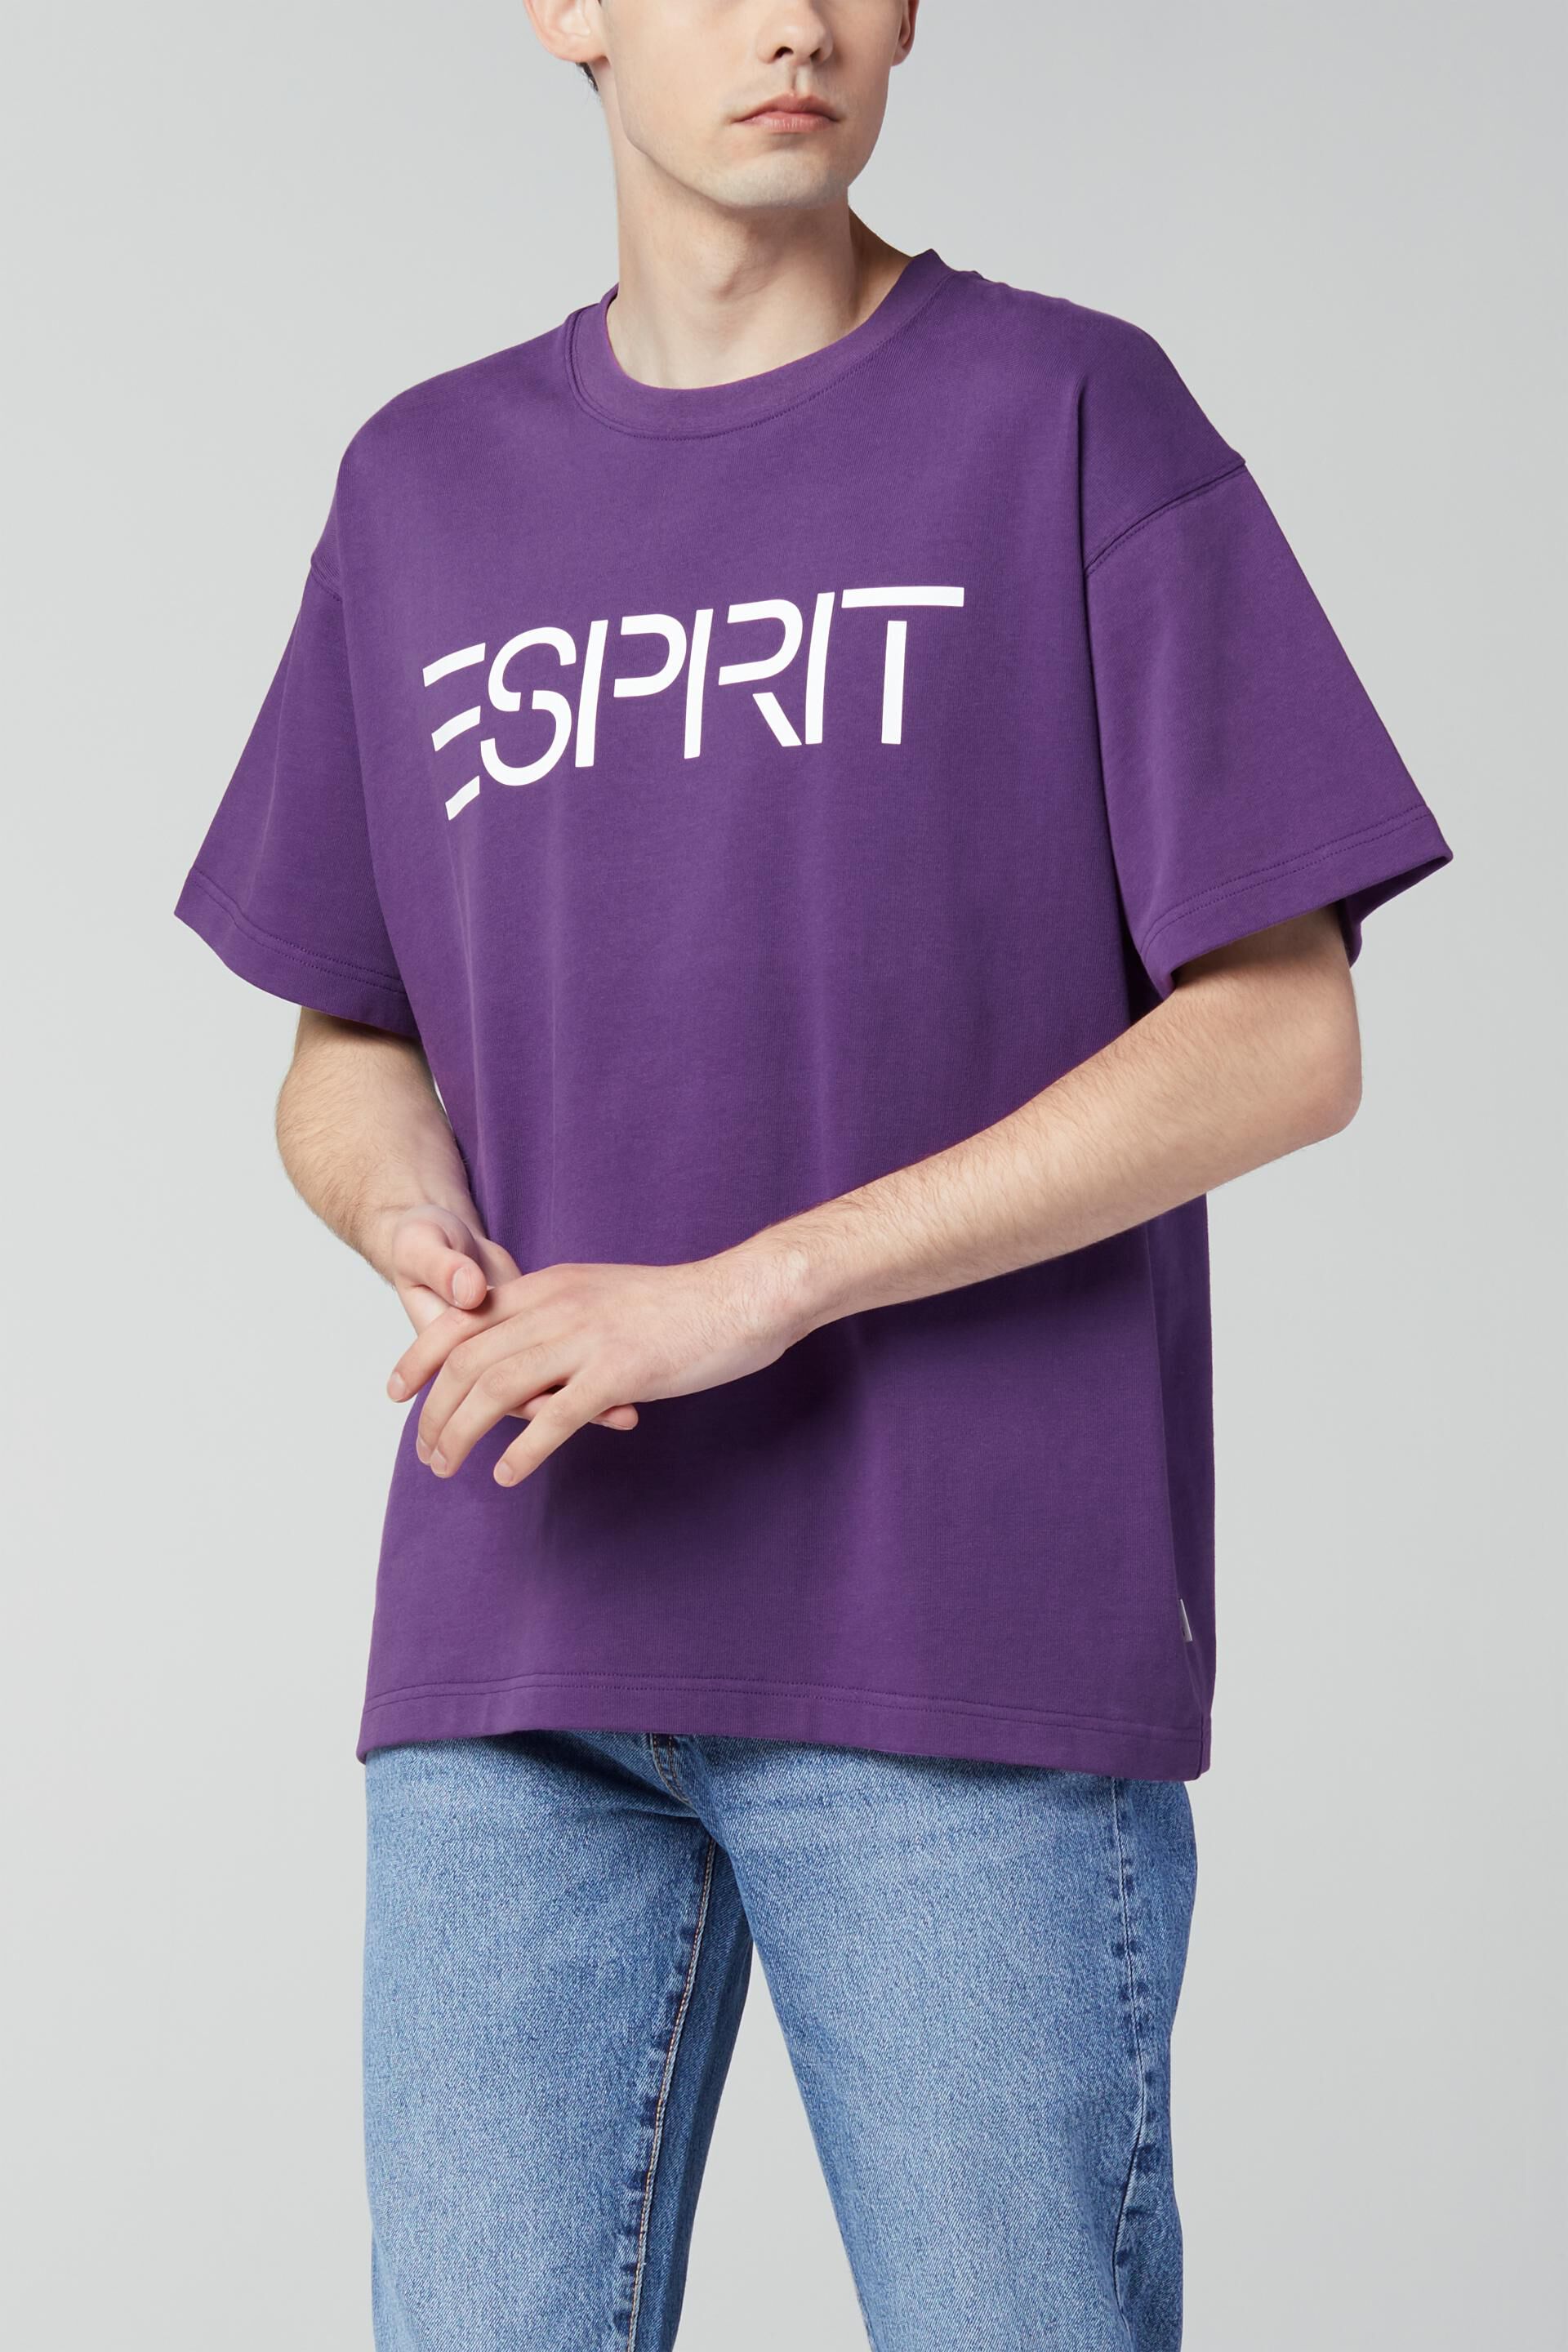 Esprit logo with Unisex T-shirt a print